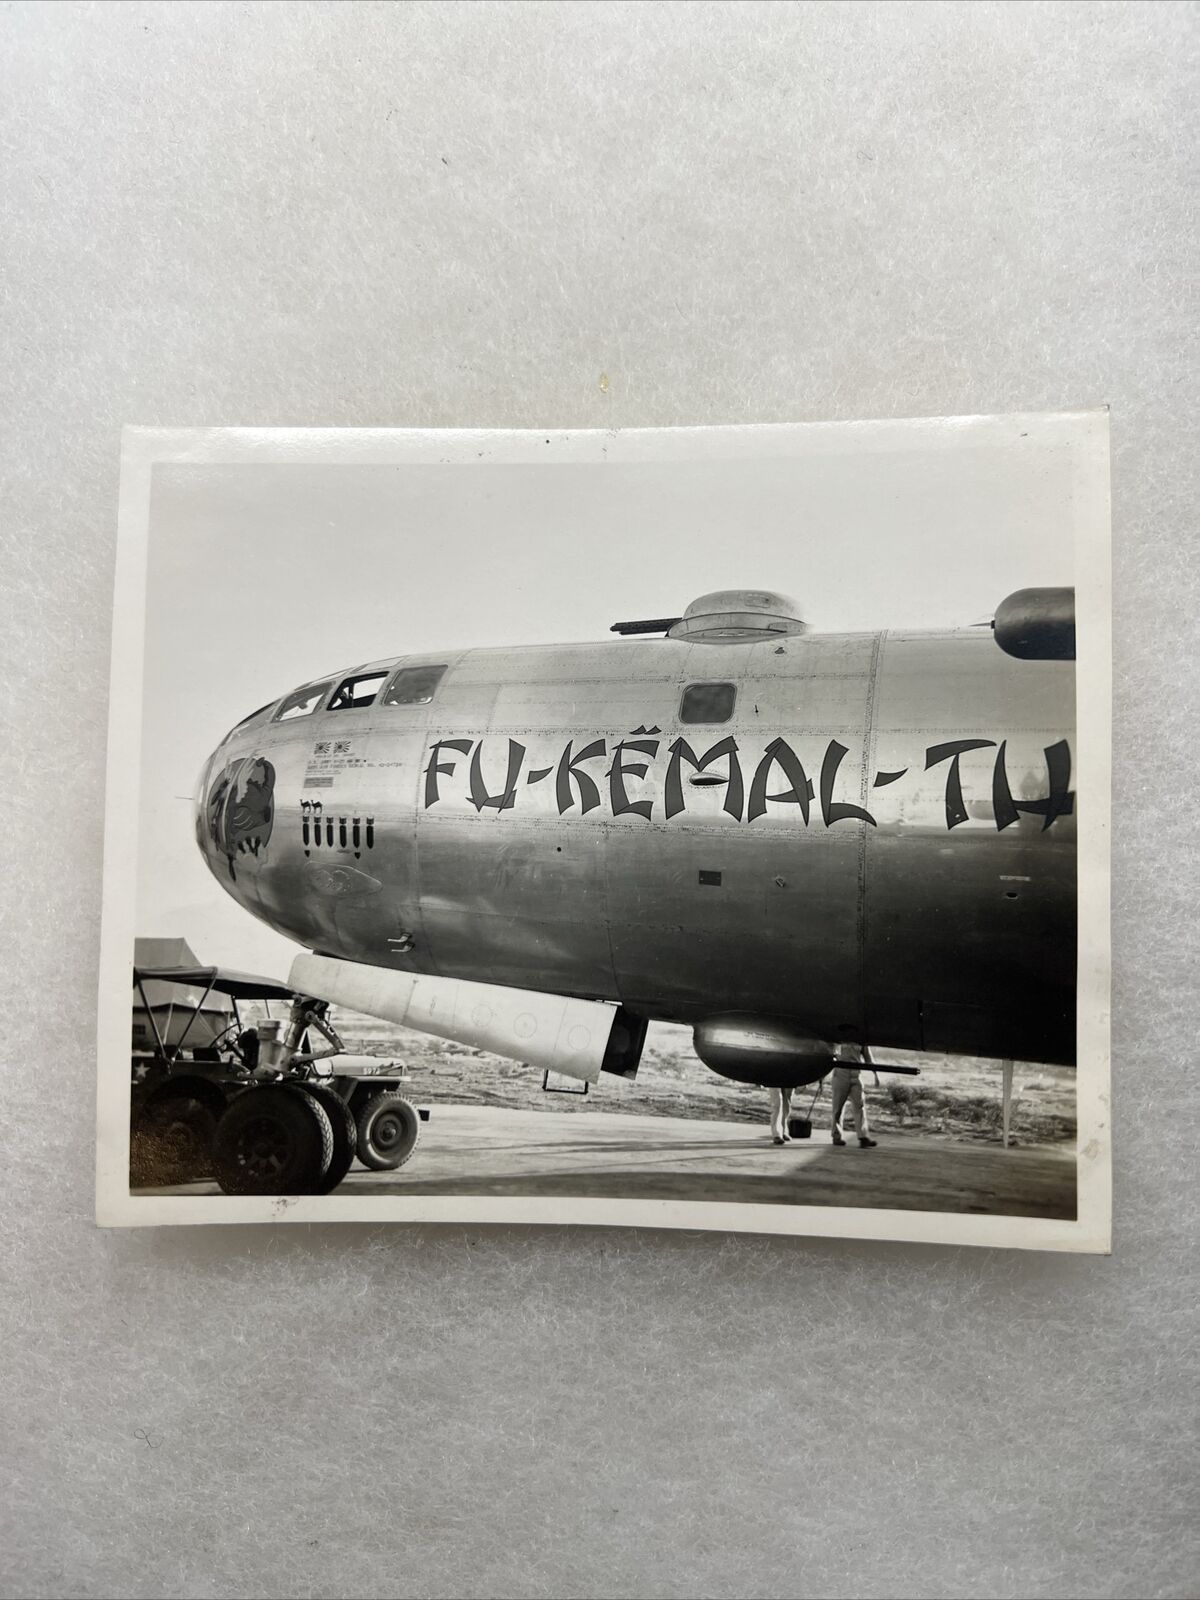 WW2 US Army Air Corps Nose Art “Fu-Kemal” Plane Photo (V100